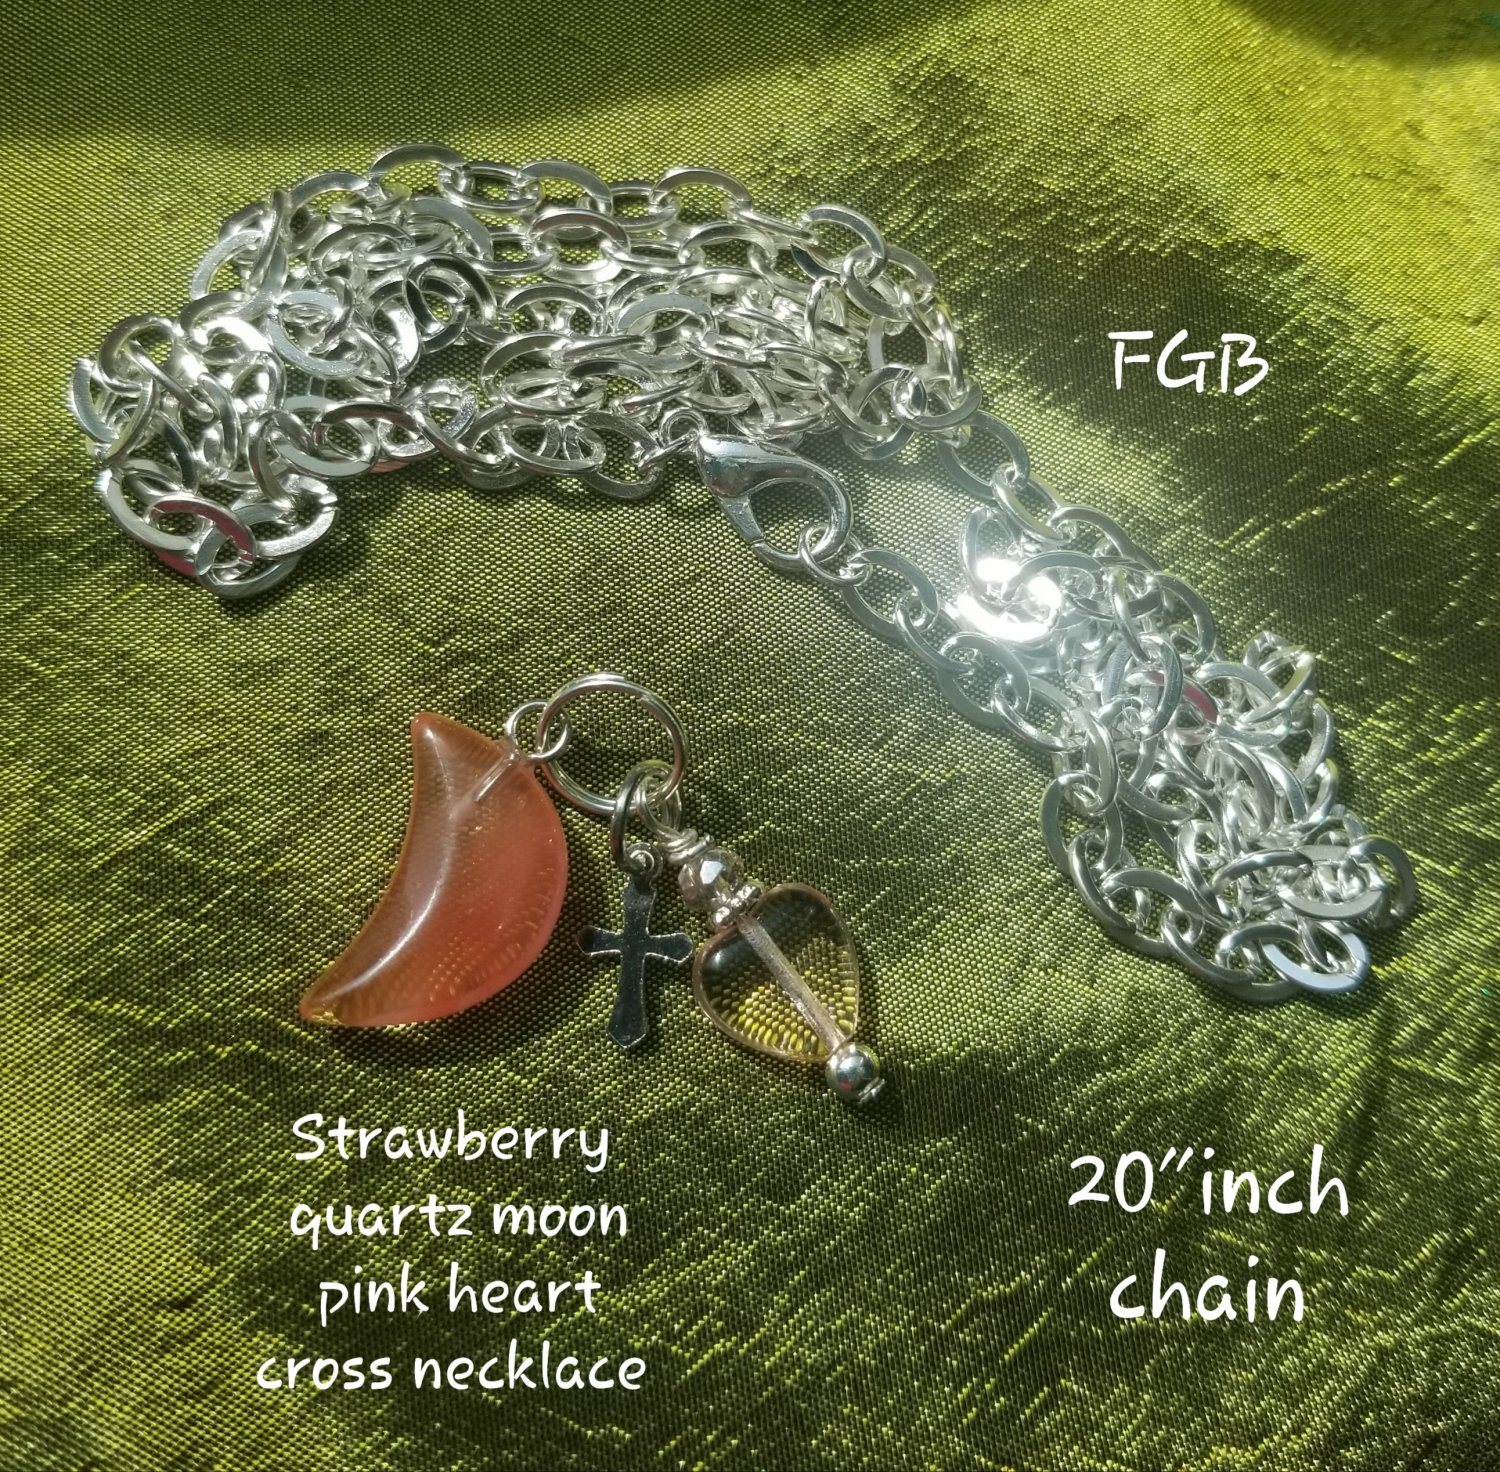 Strawberry quartz moon cross necklace